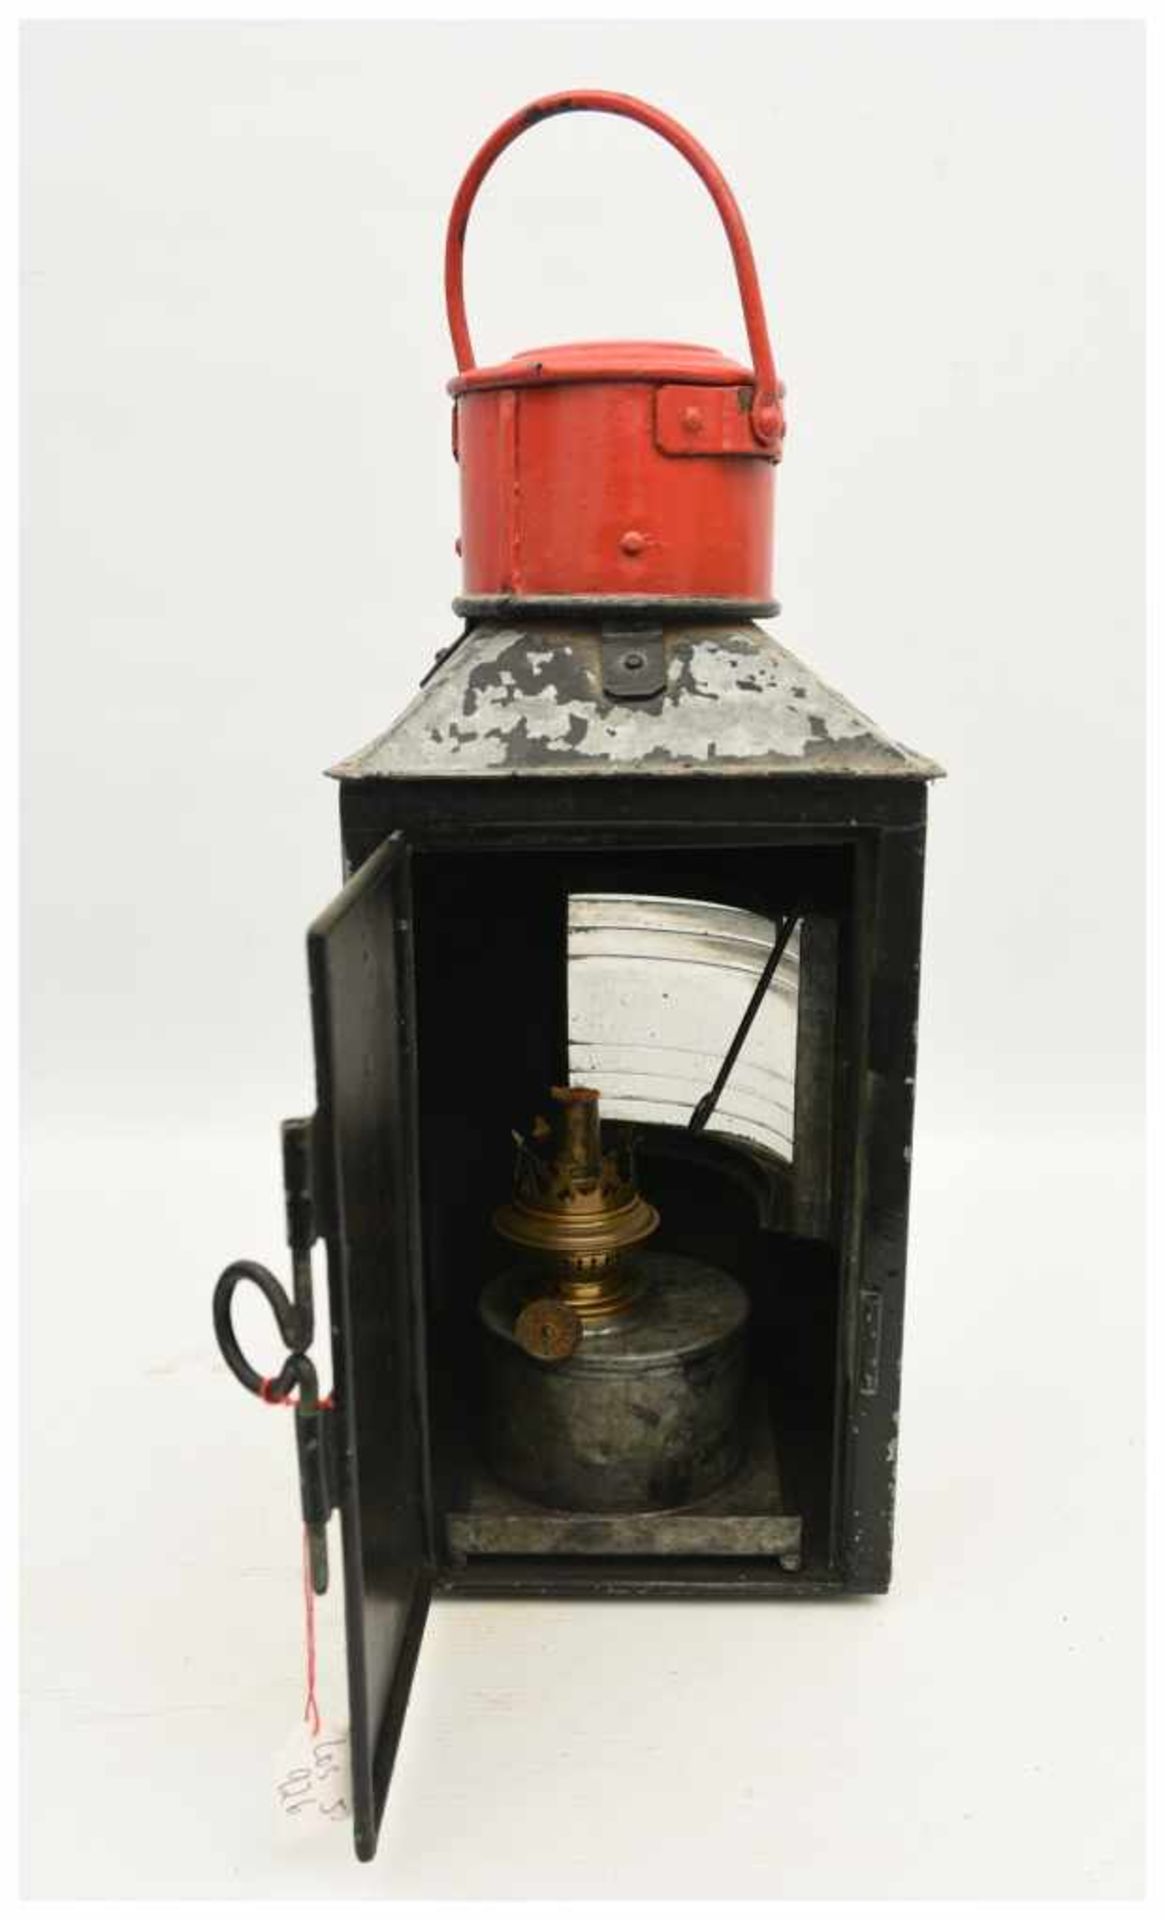 BAHN- SIGNALLATERNE, bemaltes Blech/Glas/Messing, um 1900 Mit Petroleum befüllbare Signallampe für - Image 3 of 3